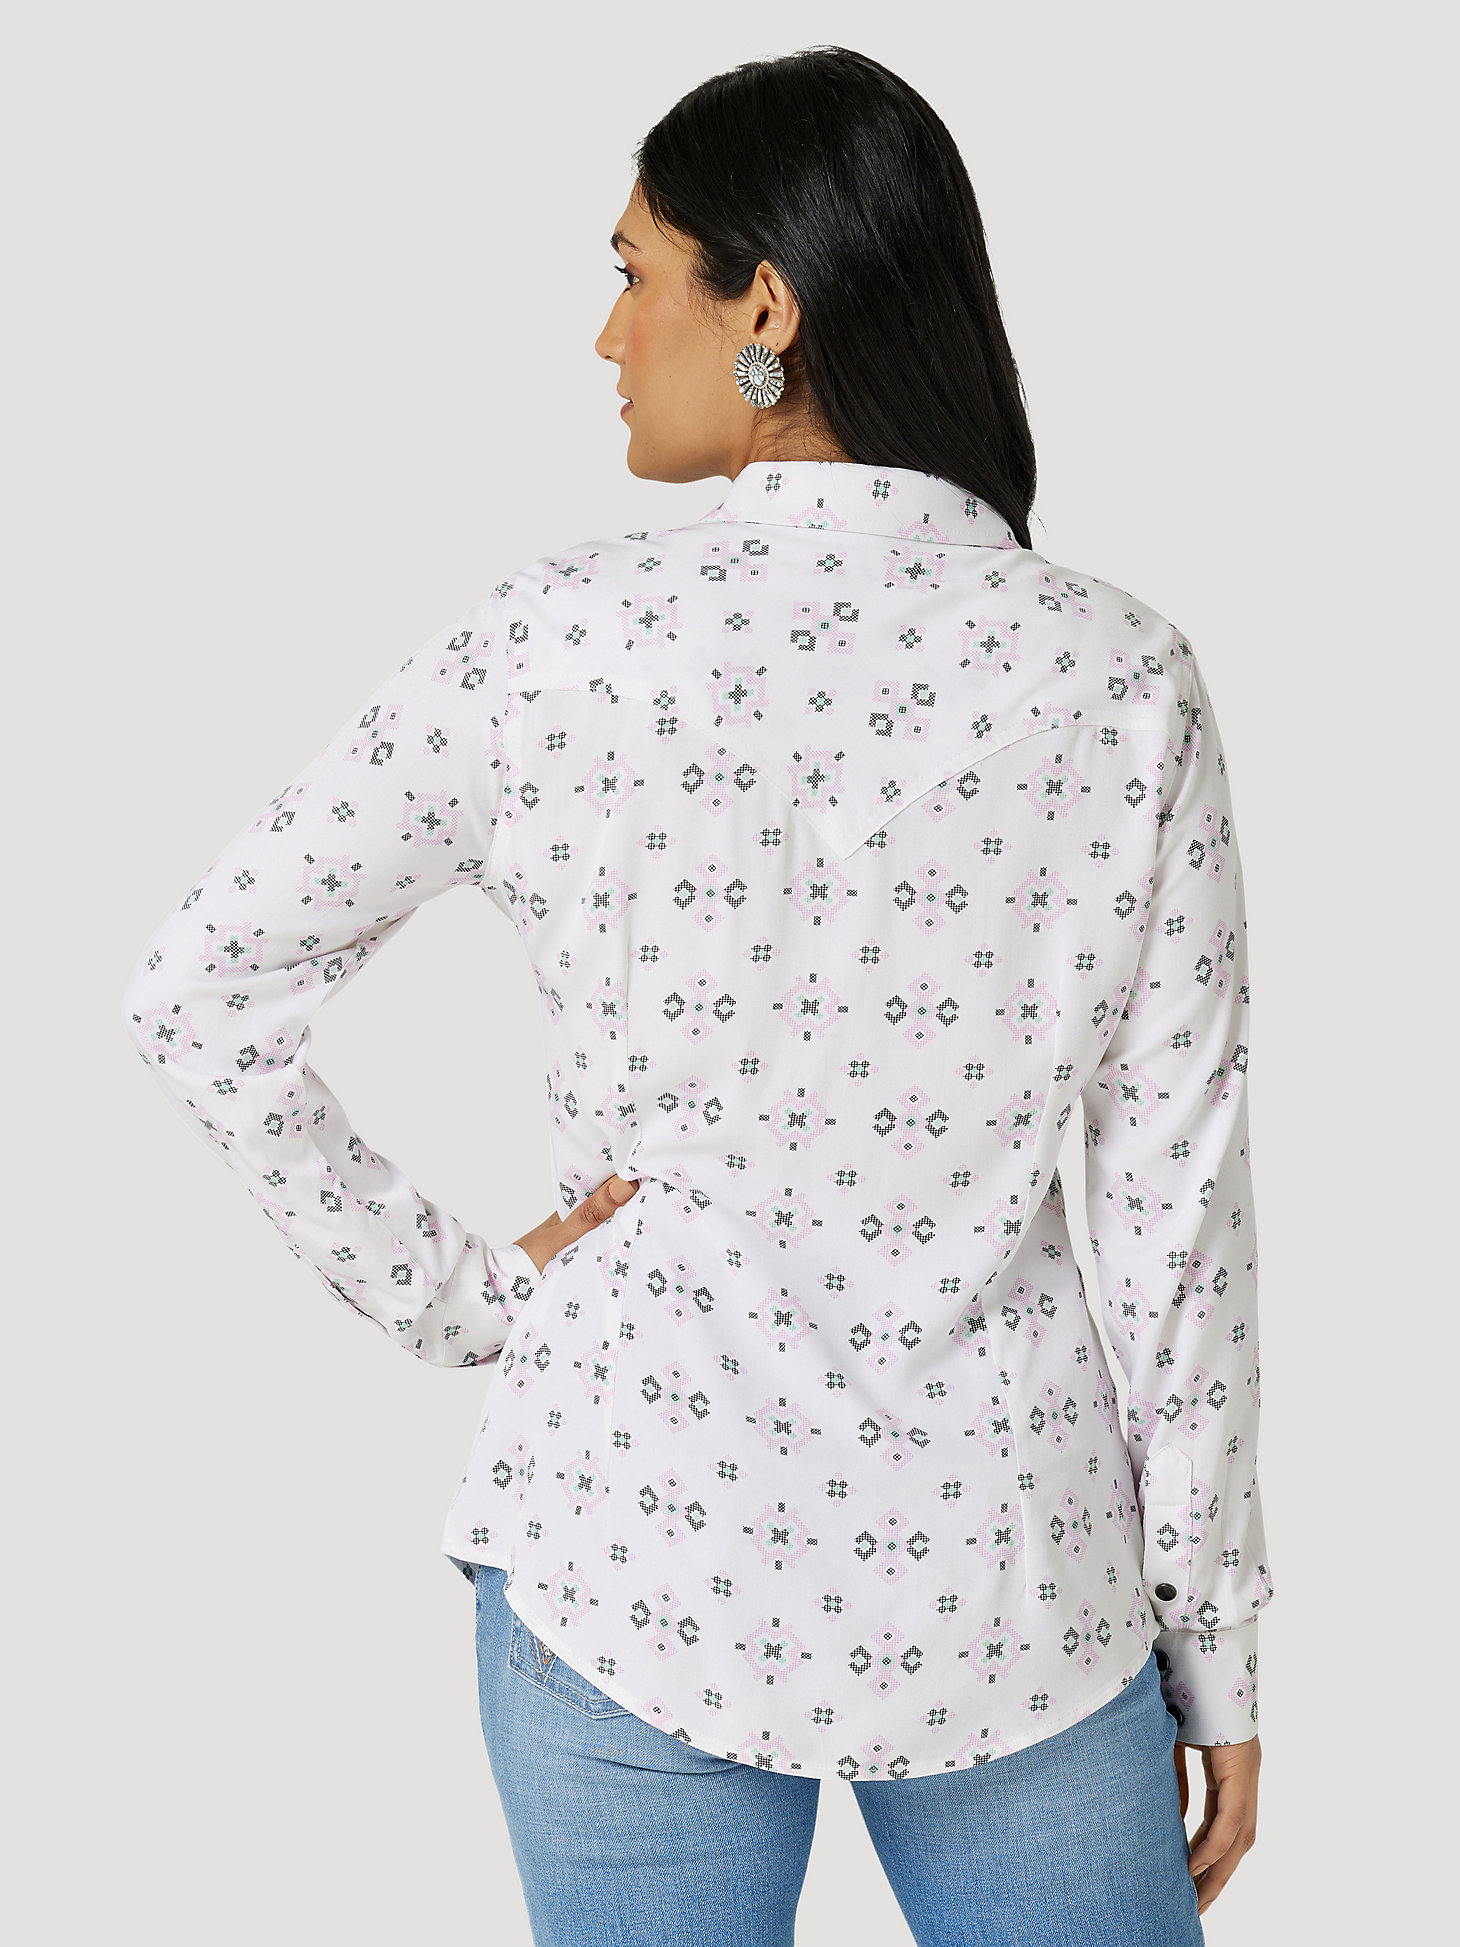 Women's Wrangler Retro® Geo Print Western Snap Shirt in White Tec alternative view 1